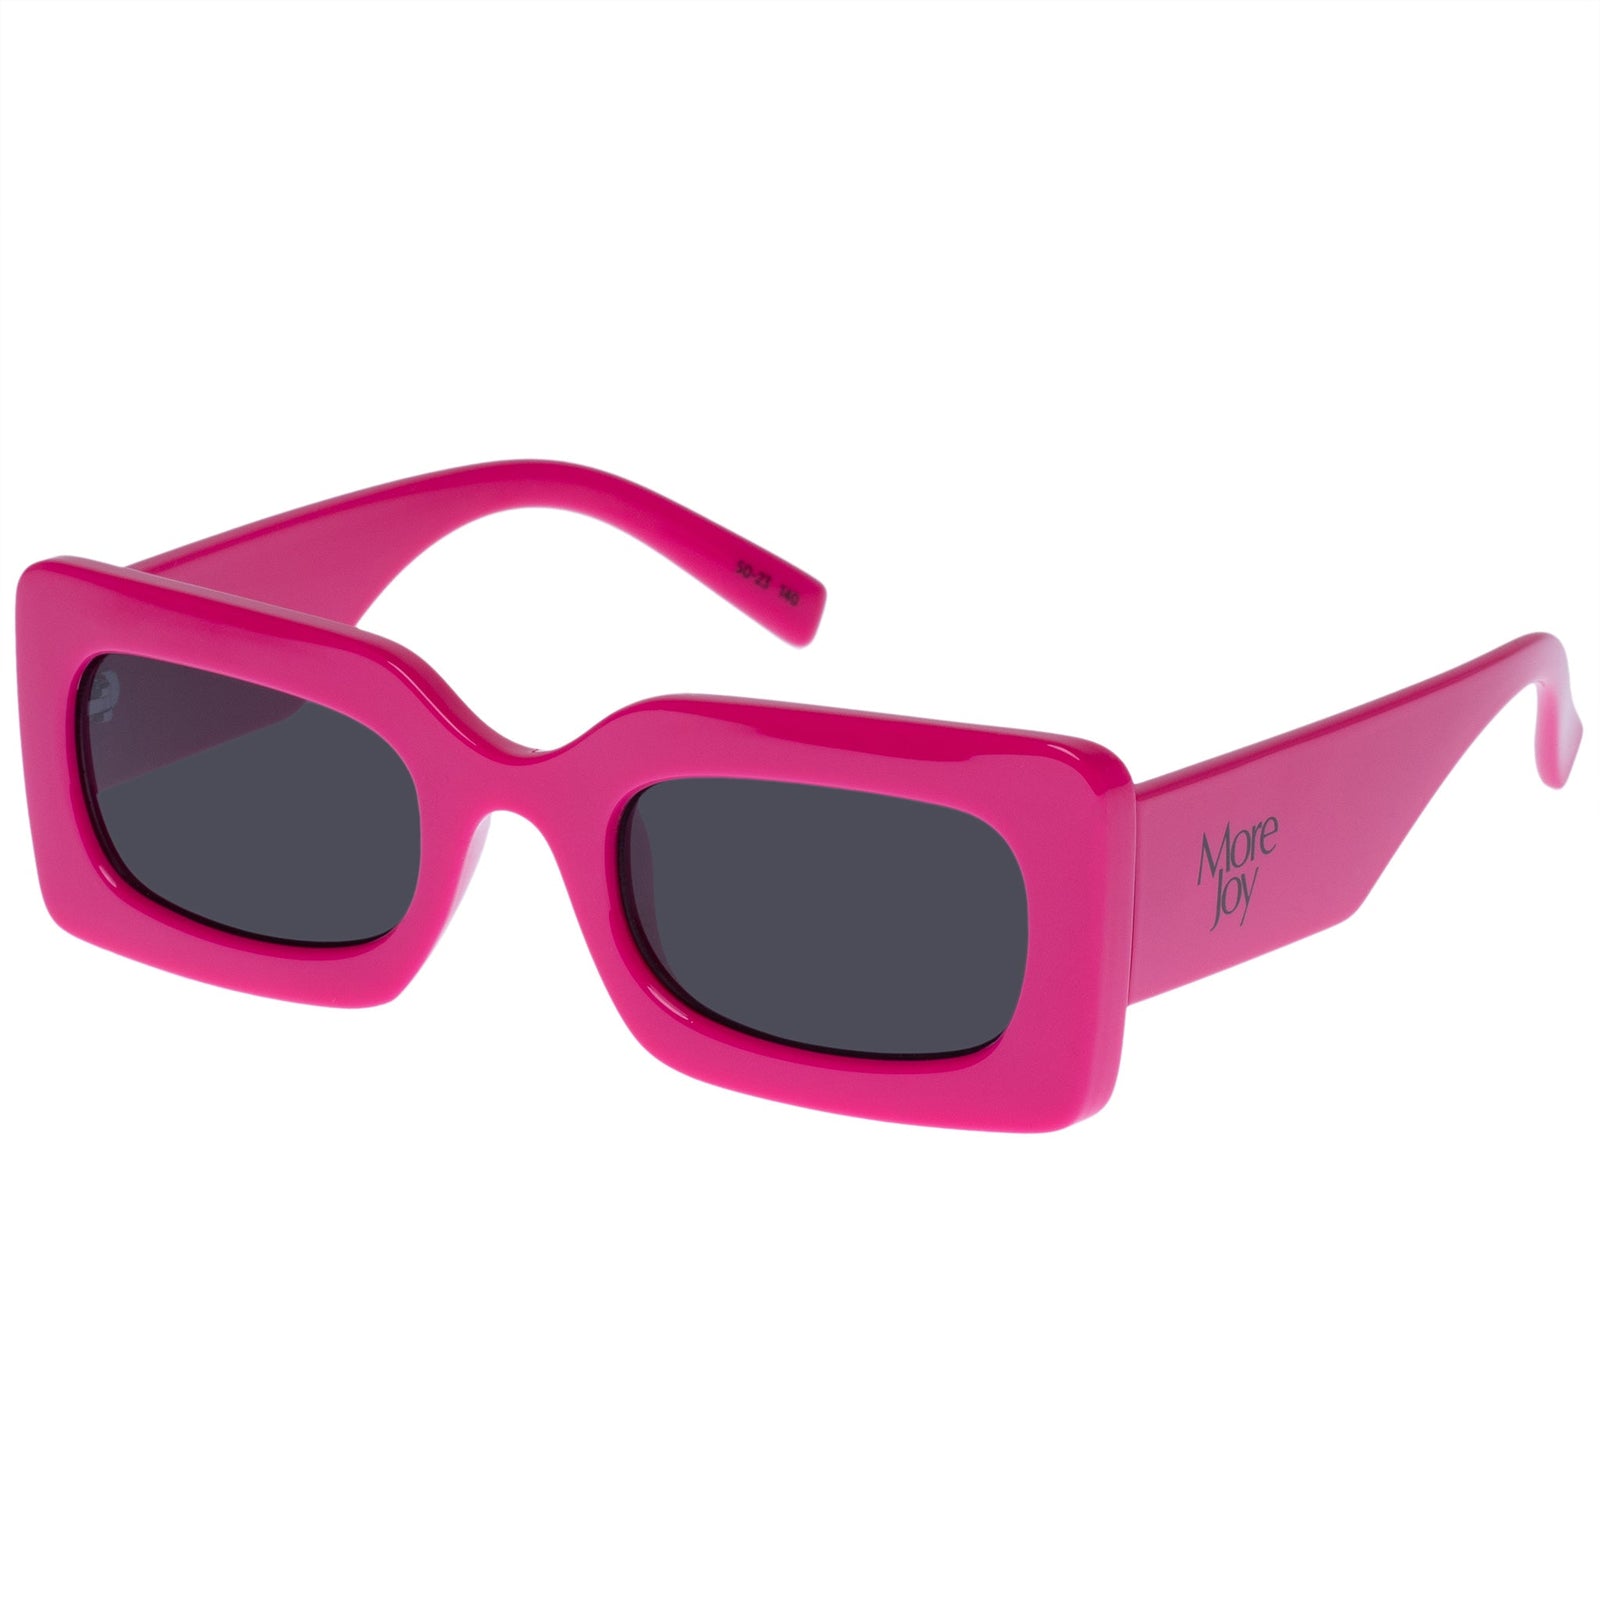 Catalina logo sunglasses in pink